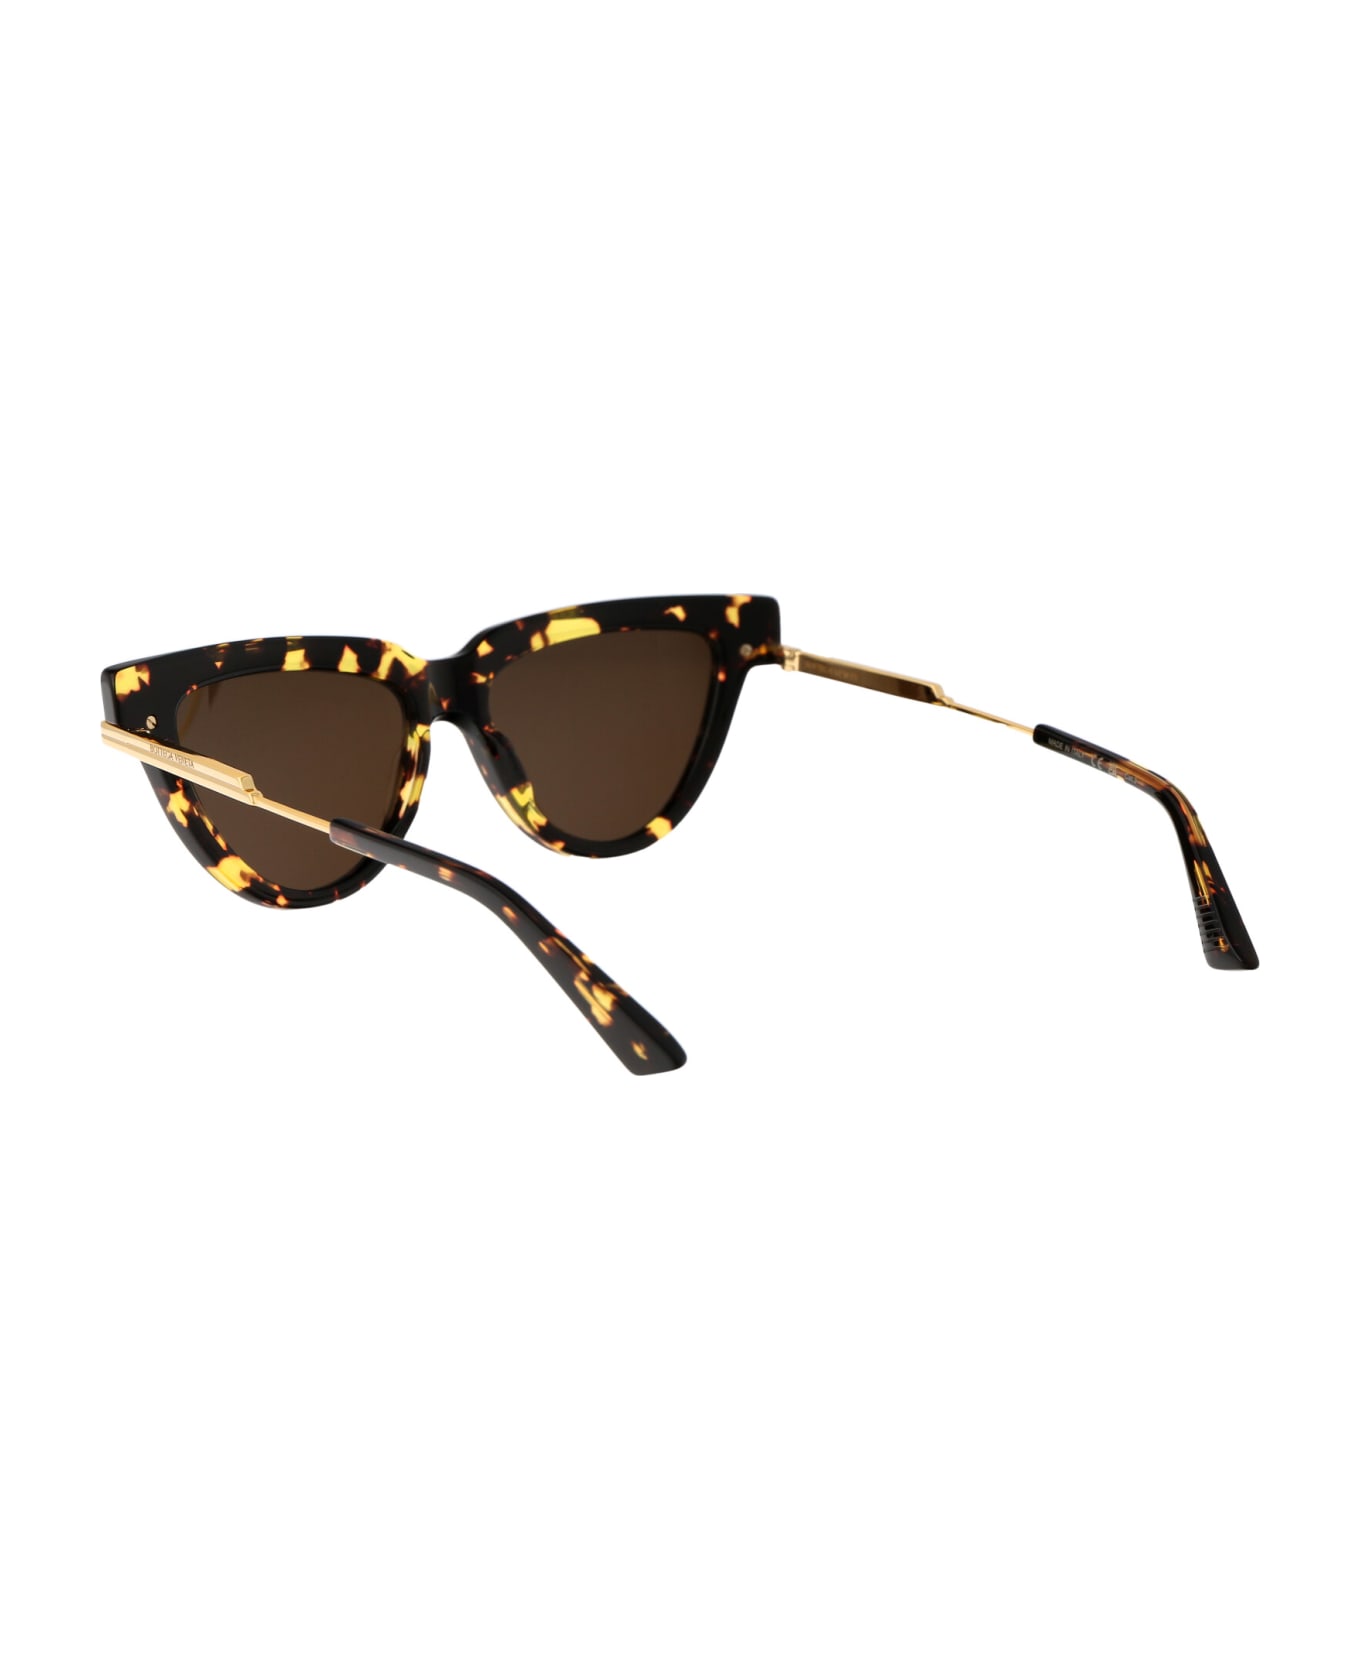 Bottega Veneta Eyewear Bv1265s Sunglasses - 002 HAVANA GOLD BROWN